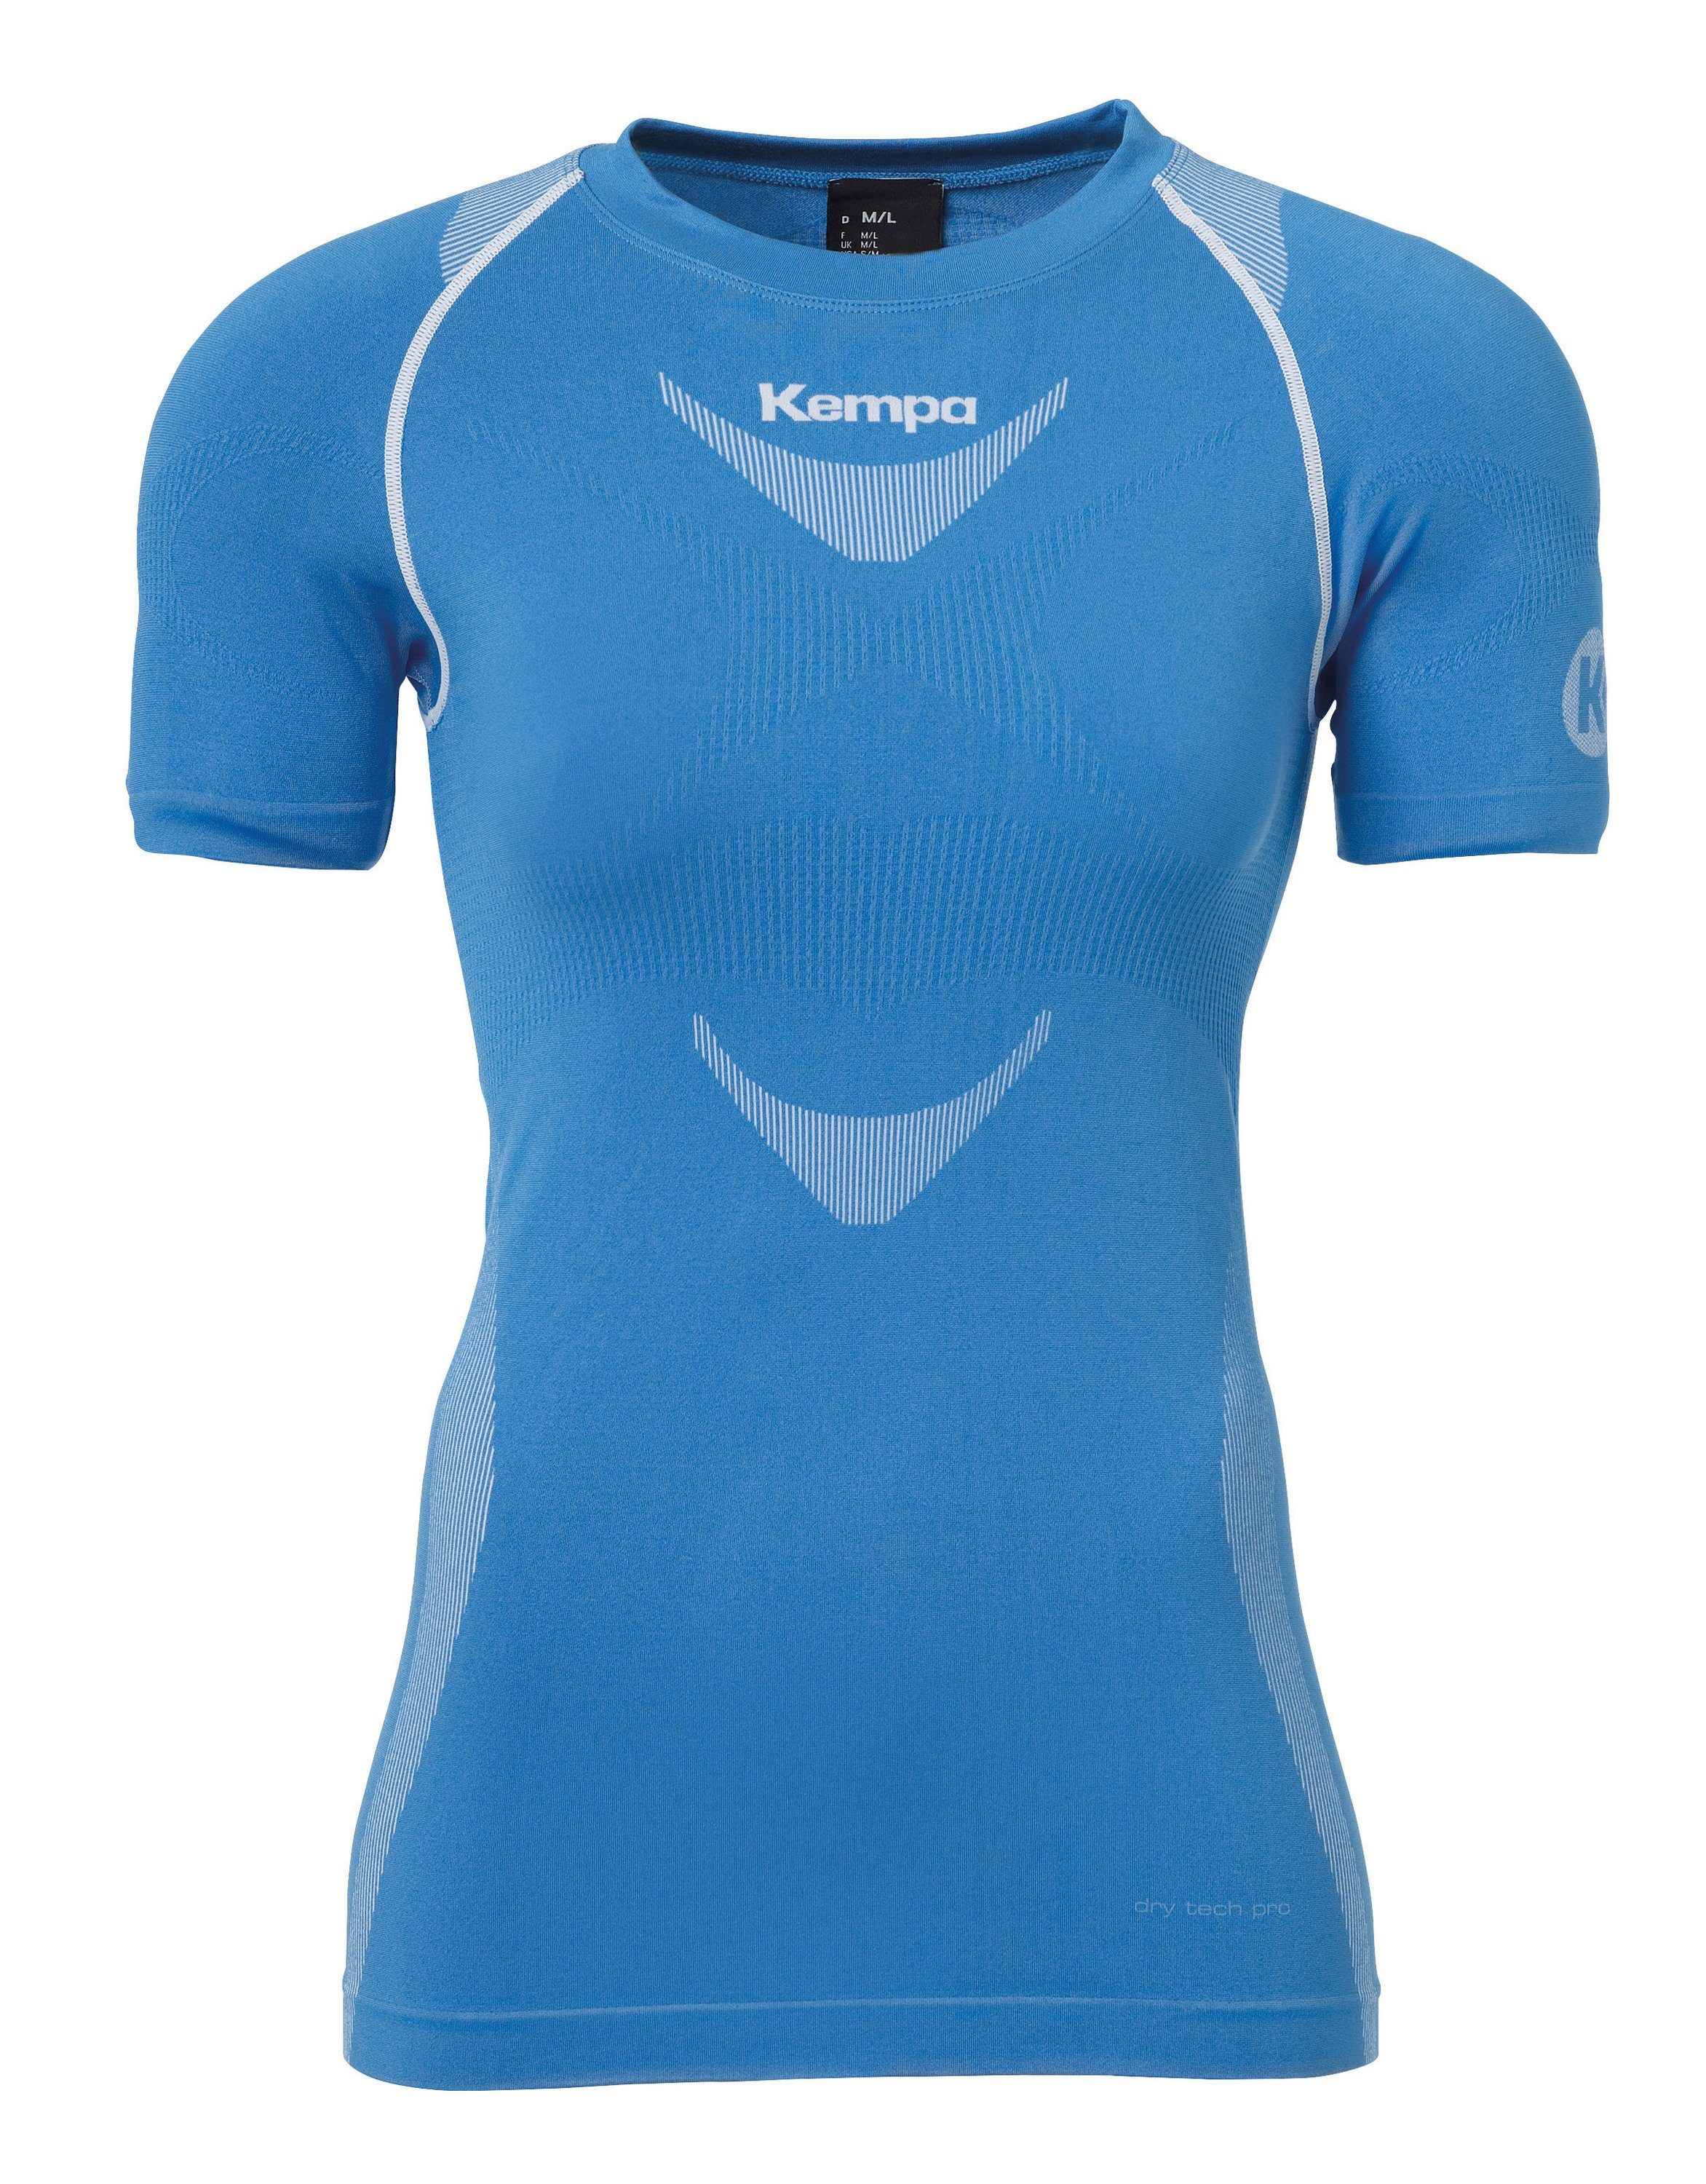 Premium Kempa Trainingsshirt PRO kempablau/weiß schnelltrocknend WOMEN Shortsleeve Kempa ATTITUDE atmungsaktiv